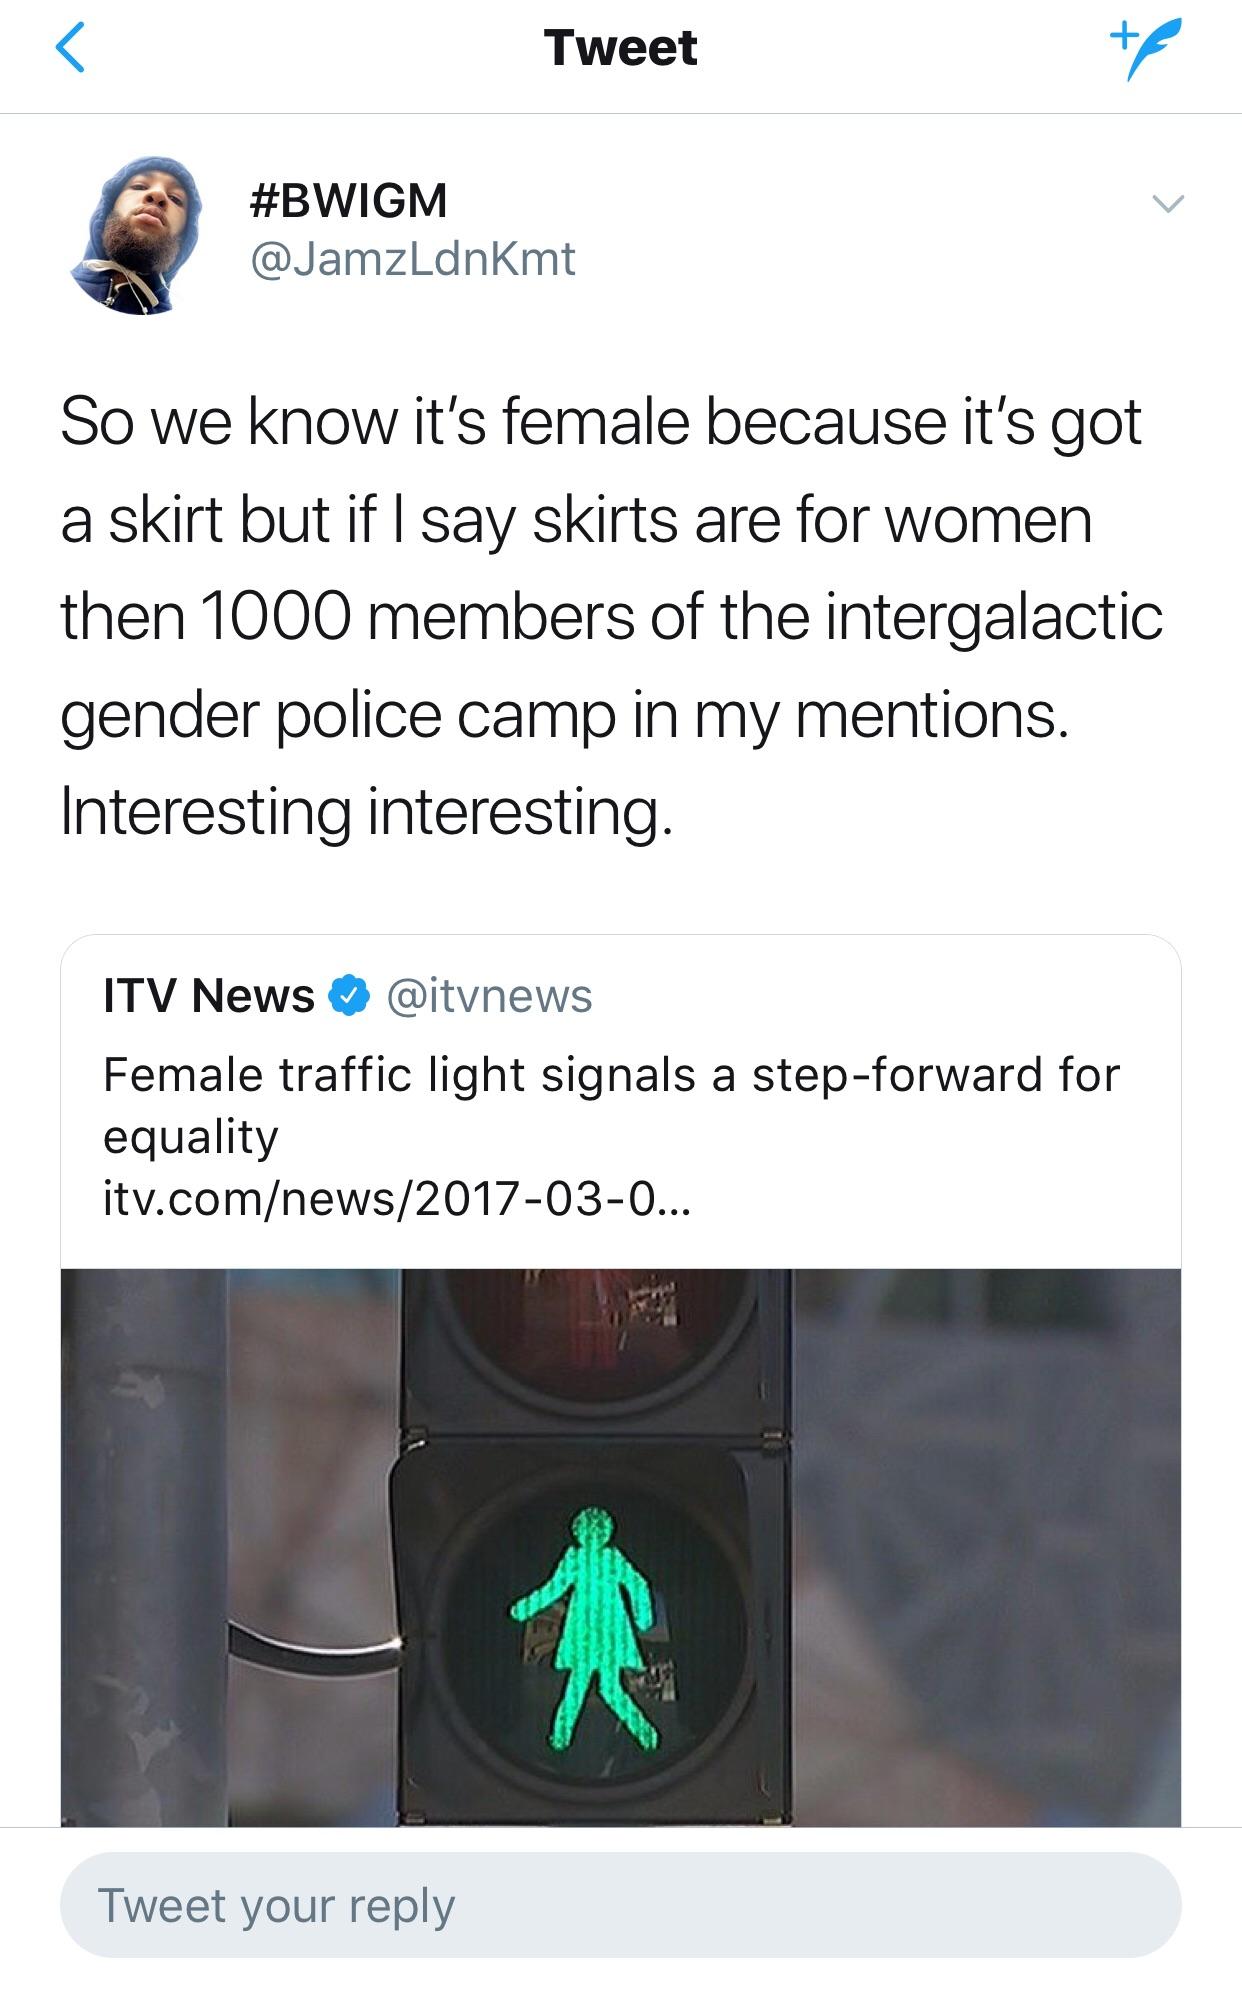 Equality traffic lights